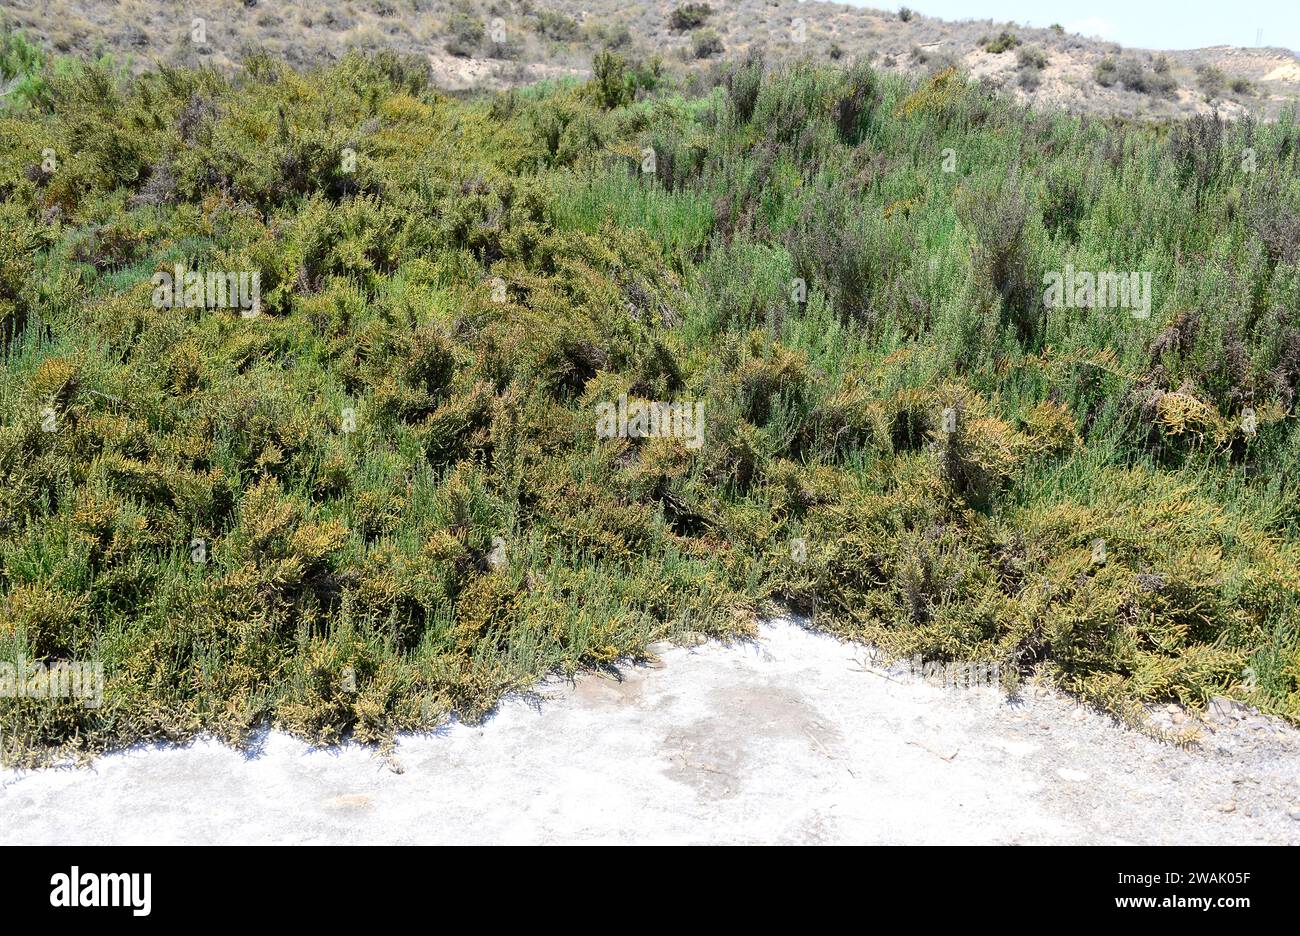 Glasswort, saltwort or samphire (Sarcocornia fruticosa, Salicornia fruticosa or Arthrocnemum fruticosum) is an halophyte shrub native to Mediterranean Stock Photo